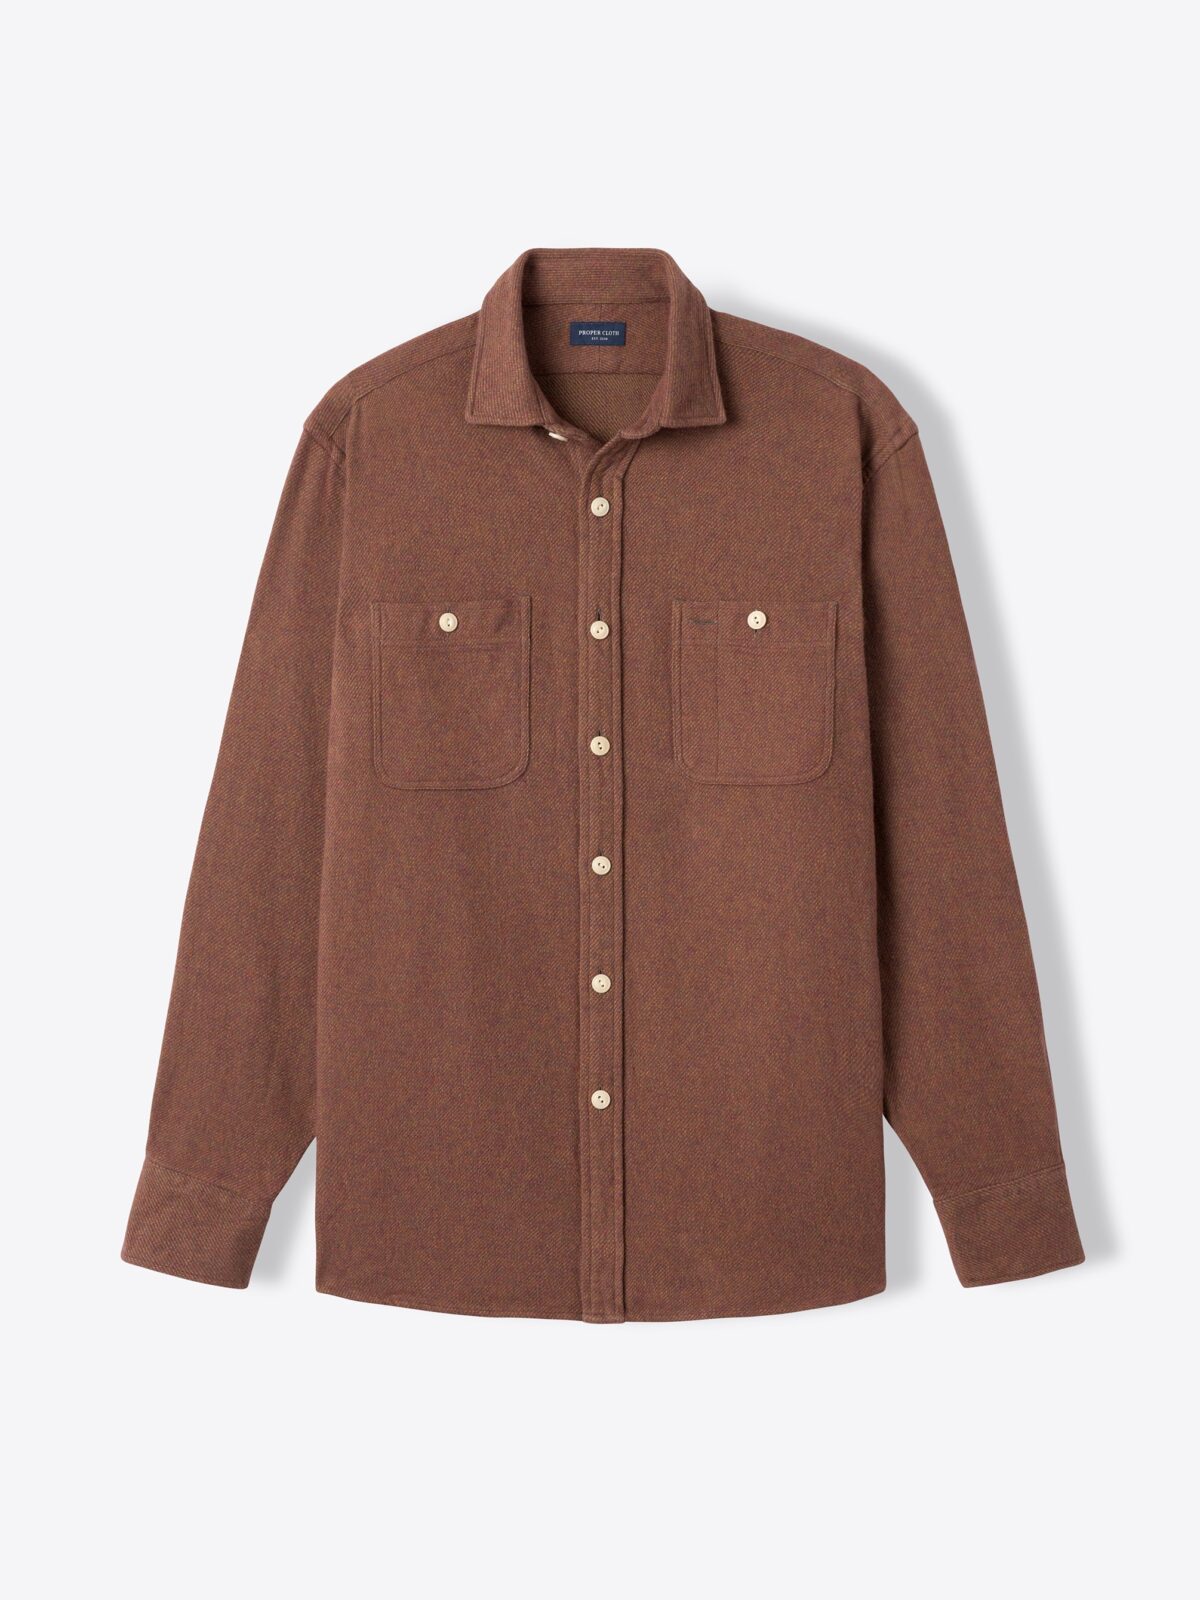 Japanese Rust Low Twist Twill Shirt by Proper Cloth